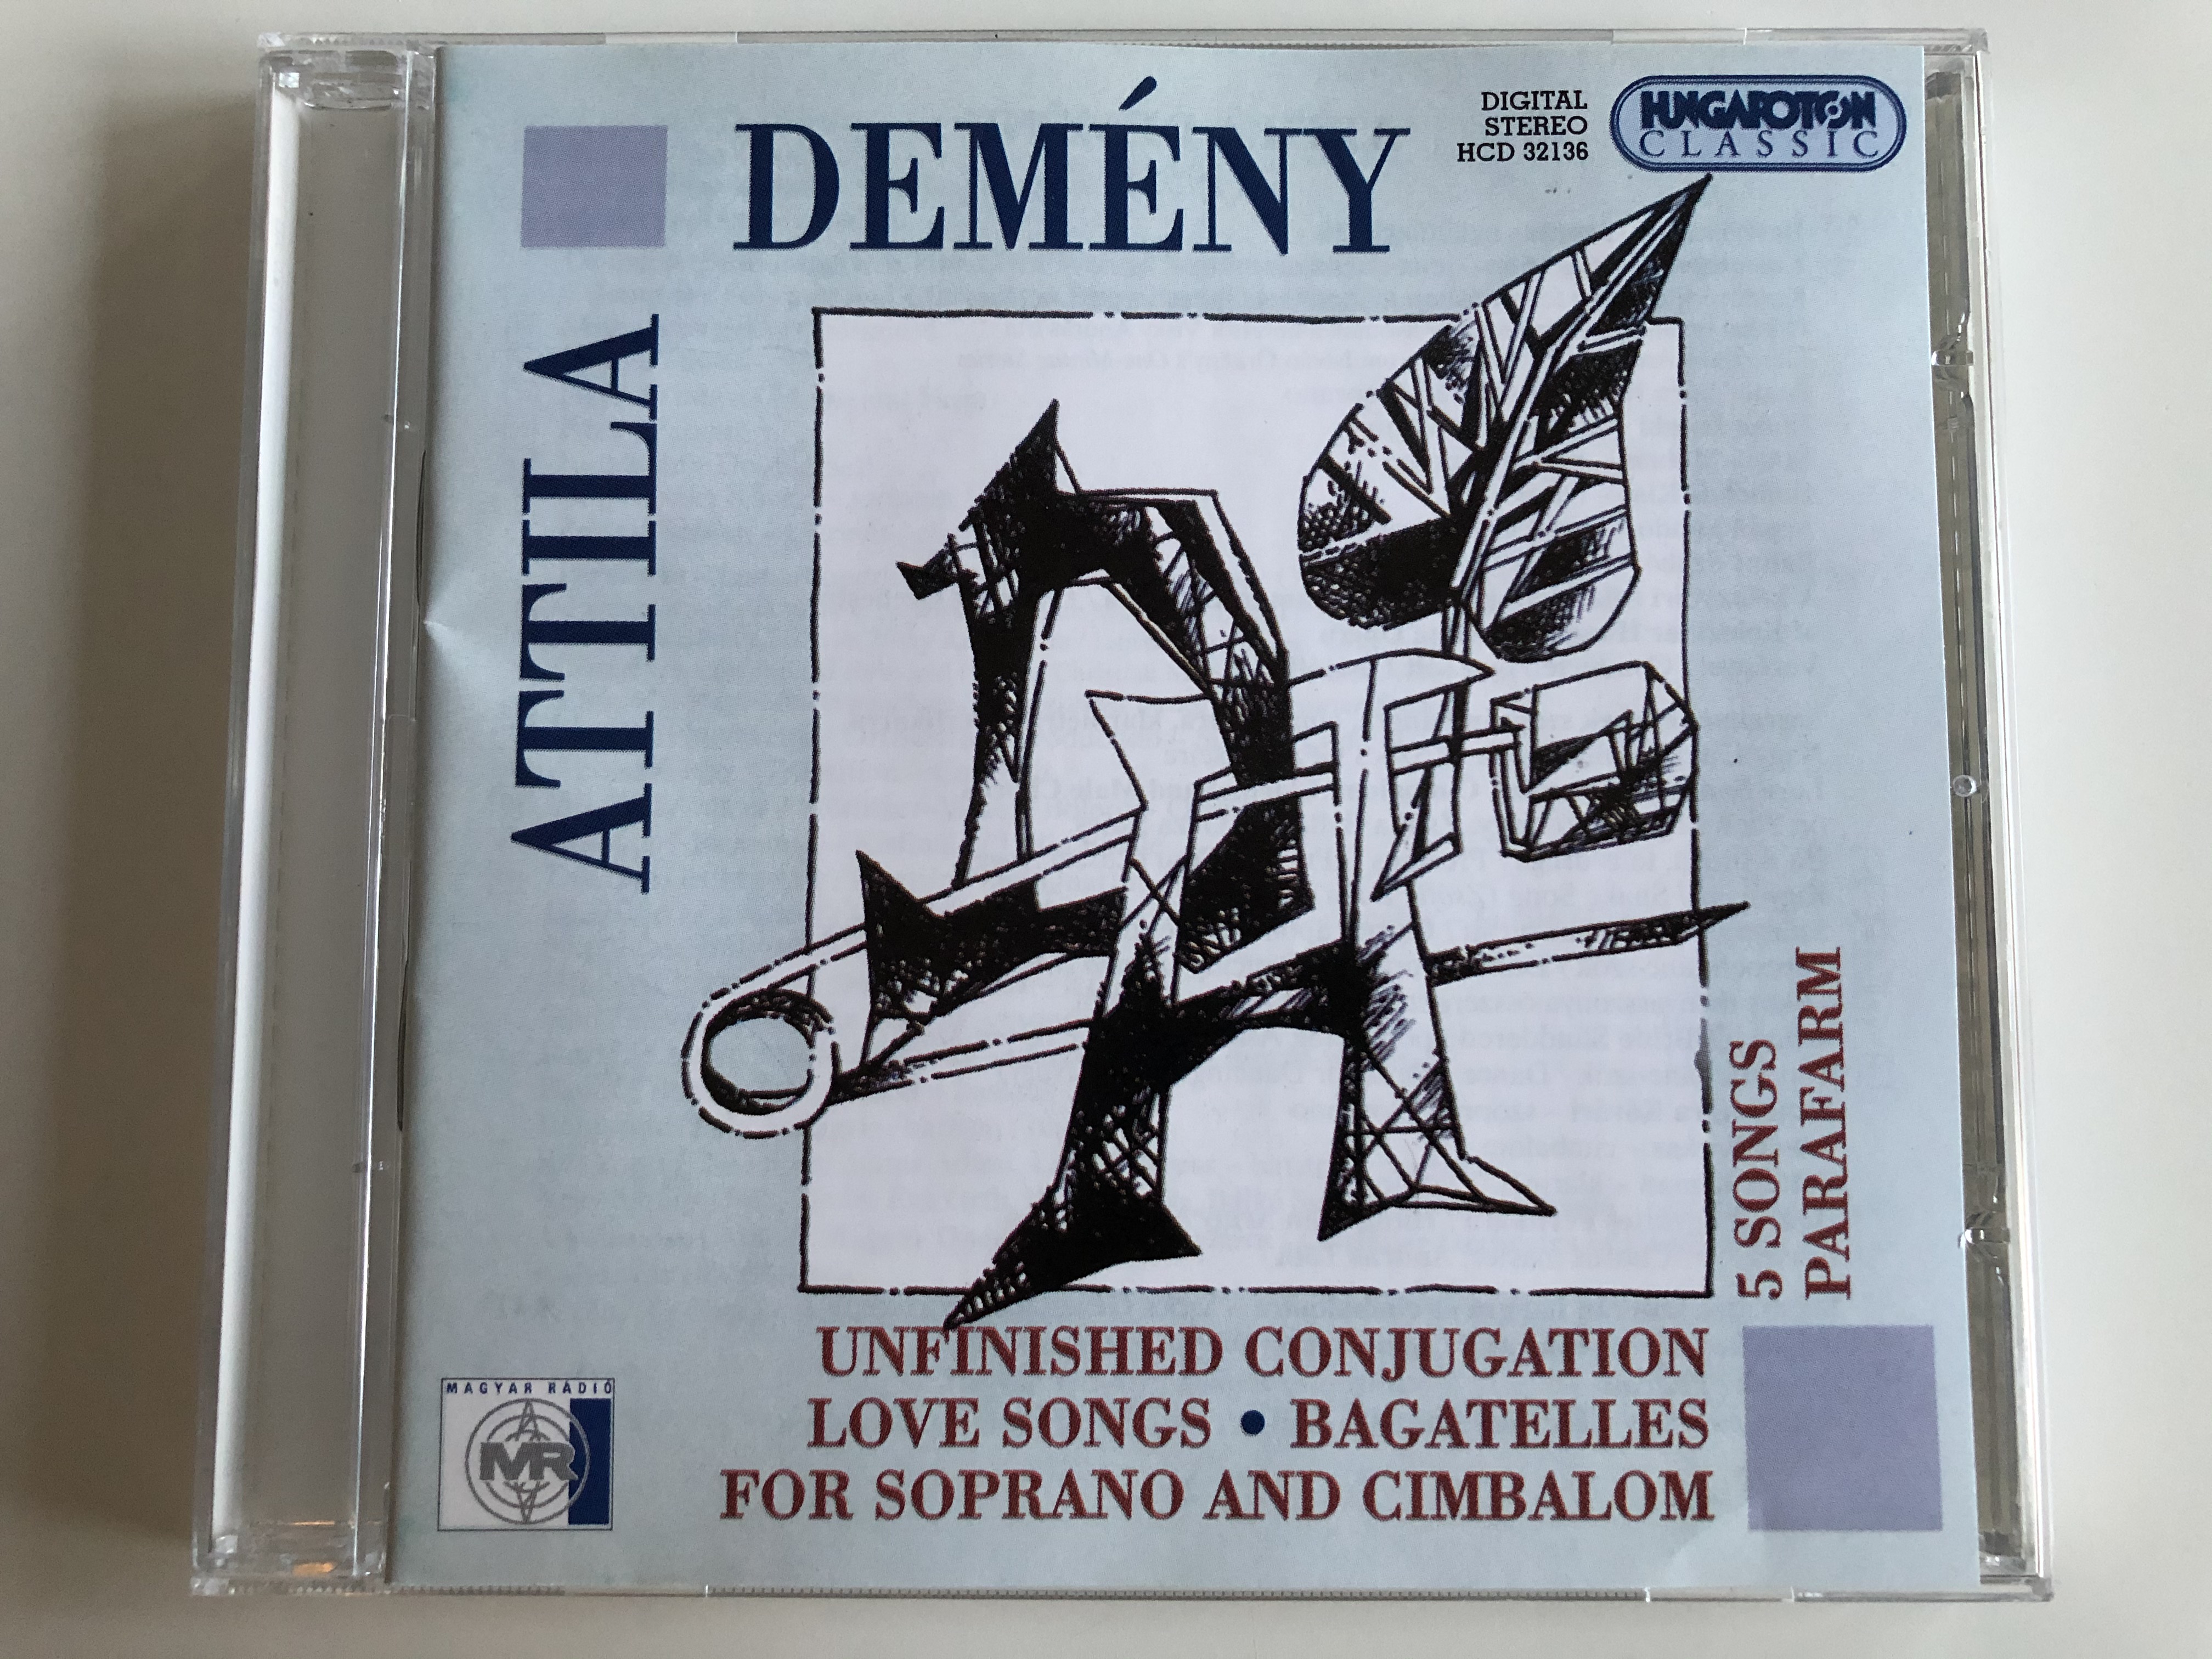 attila-demeny-5-songs-parafarm-unfinished-conjugation-love-songs-bagatelles-for-soprano-and-cimbalom-hungaroton-classic-audio-cd-2002-stereo-hcd-32136-1-.jpg